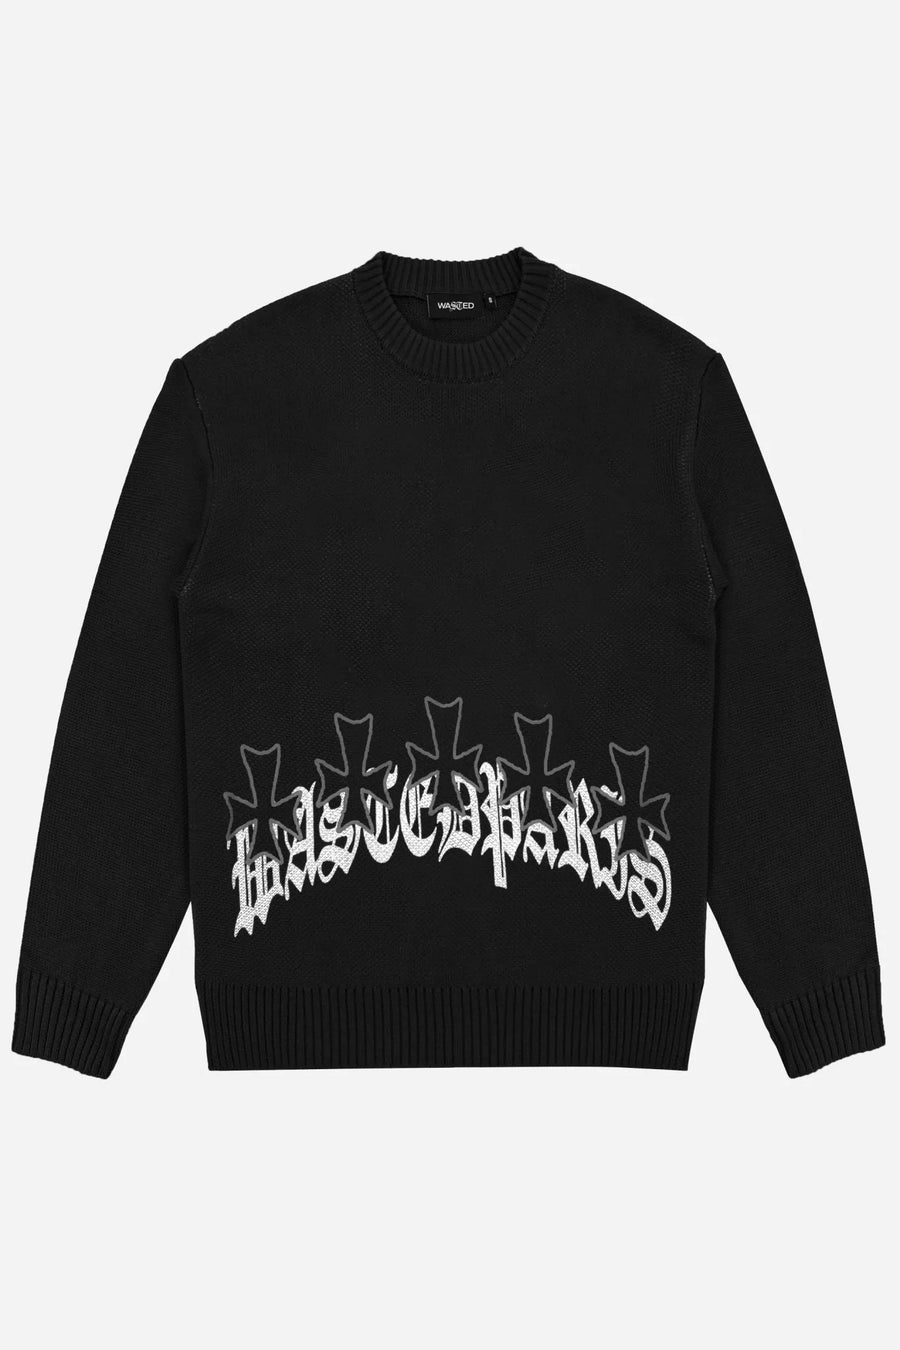 wasted paris sudadera sweater kingdom cross black